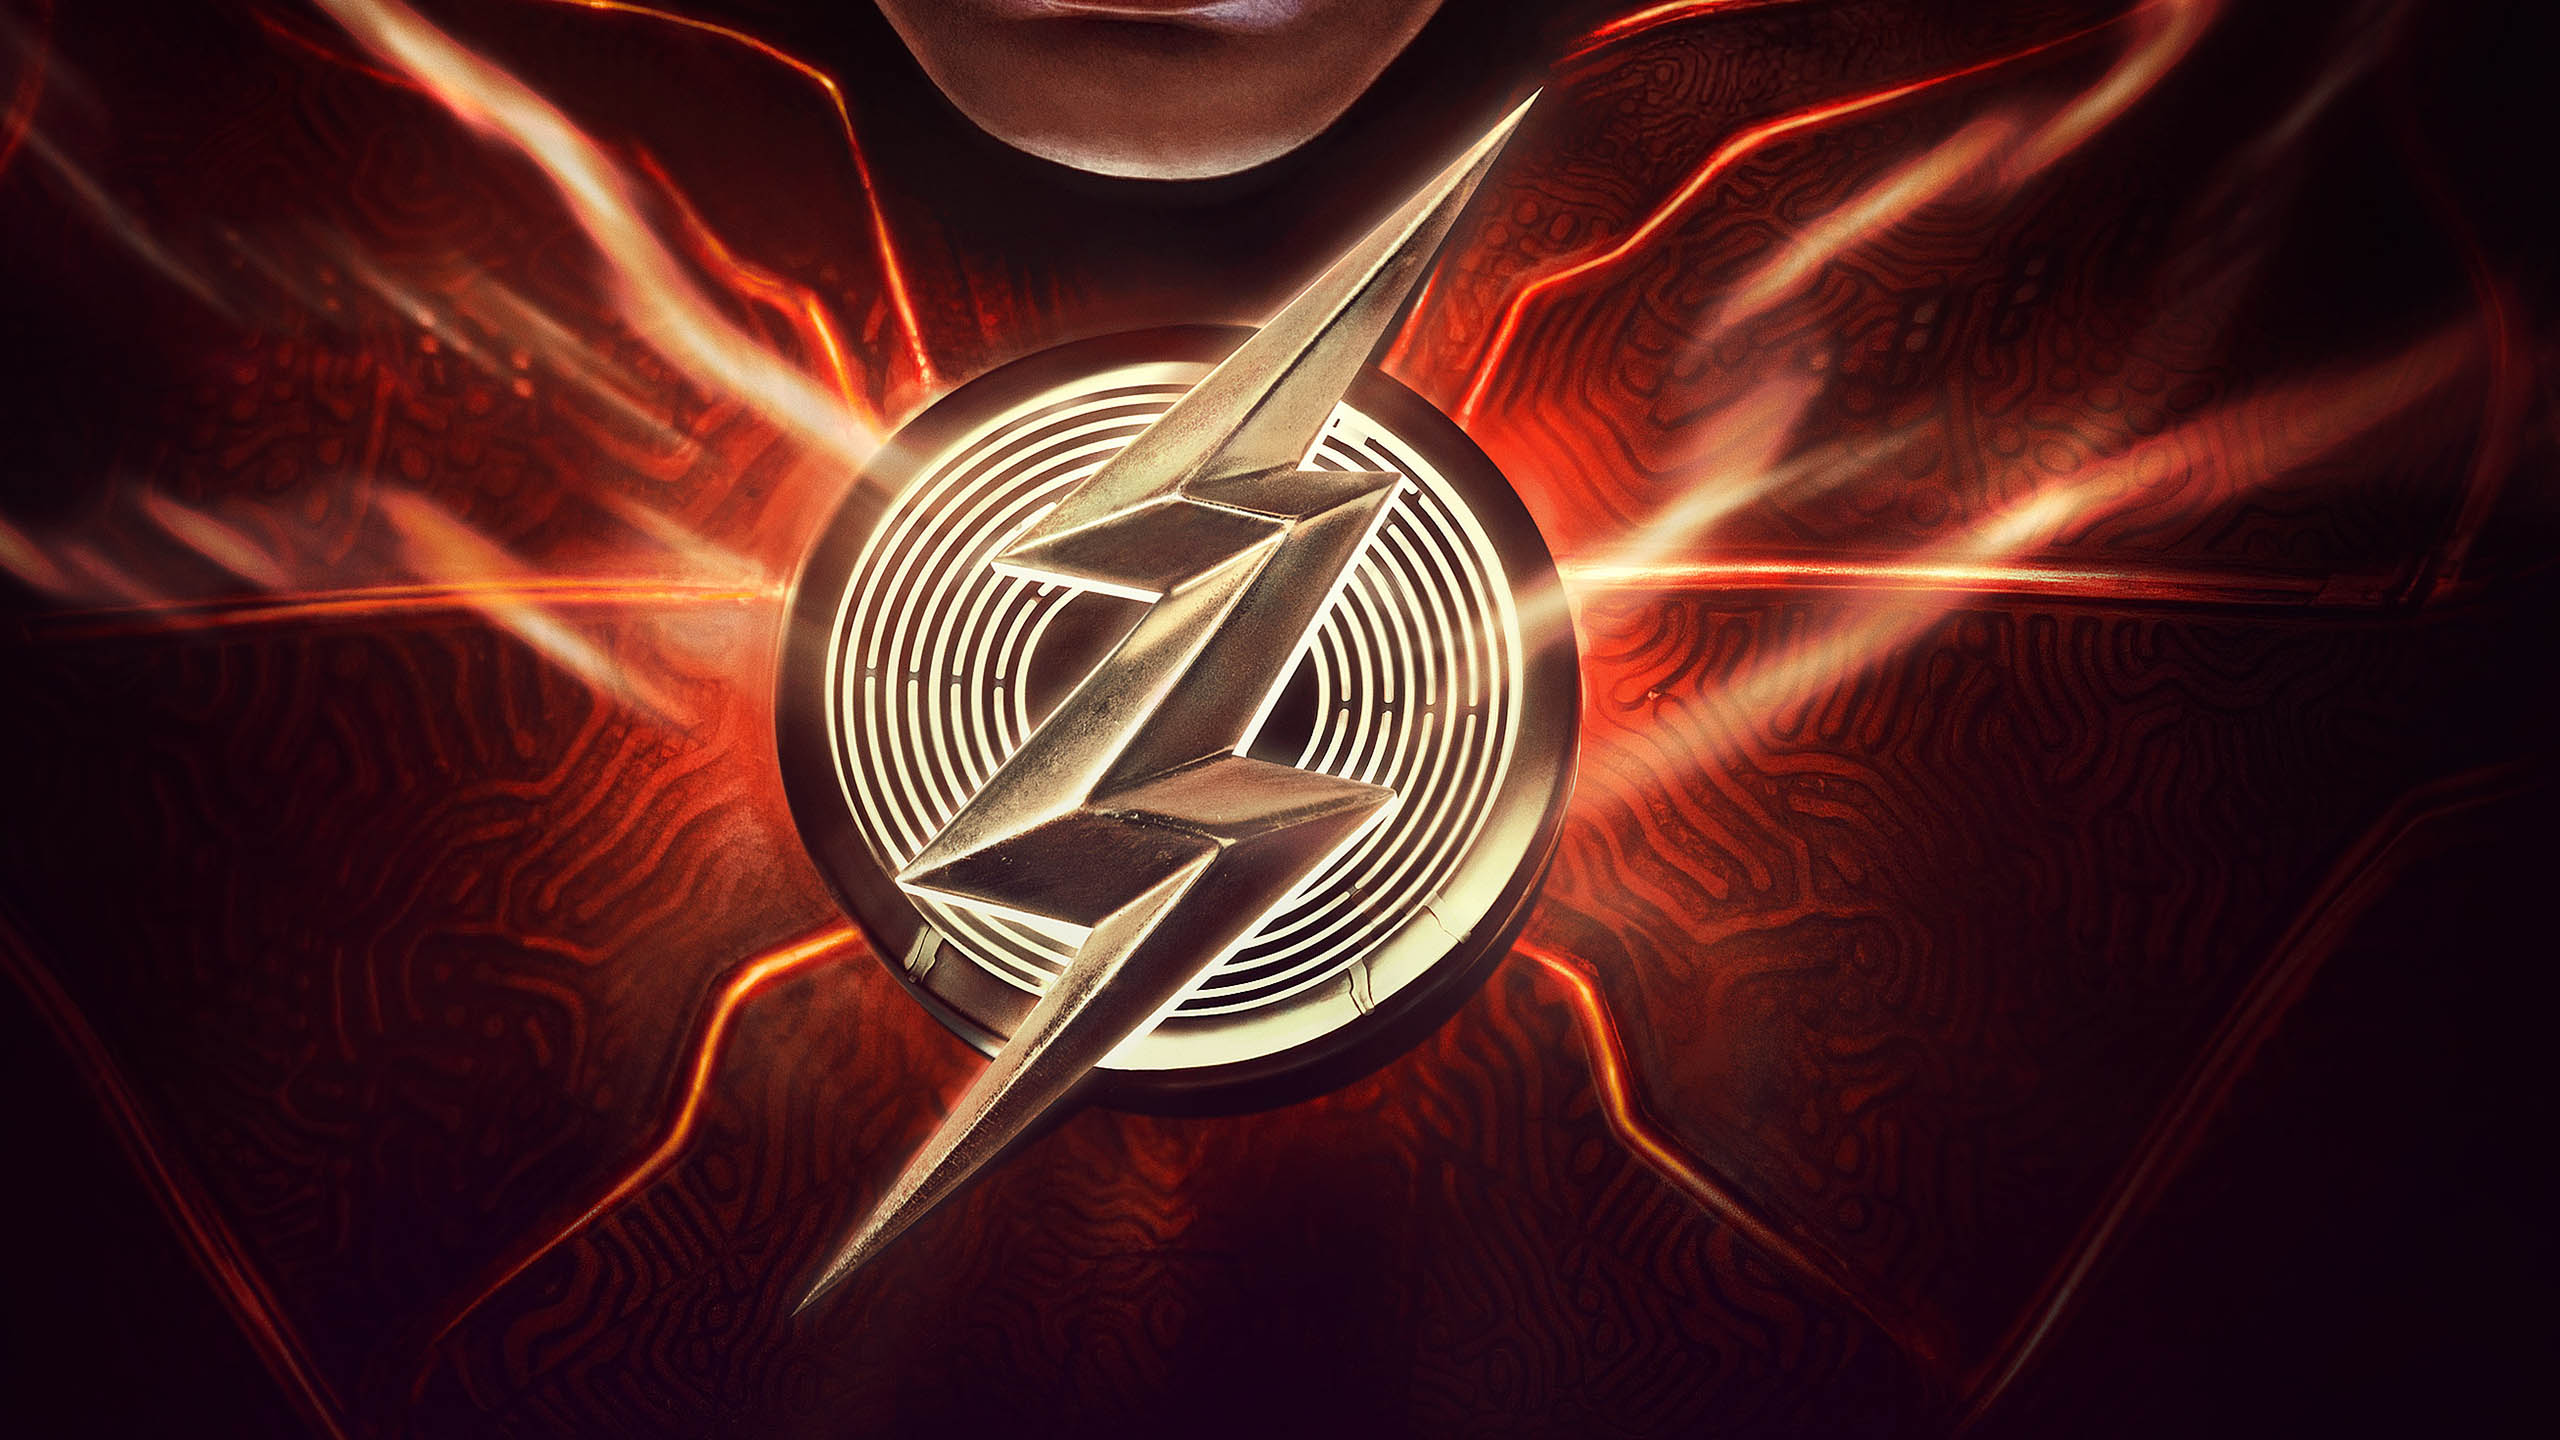 The Flash (2023) - Movie